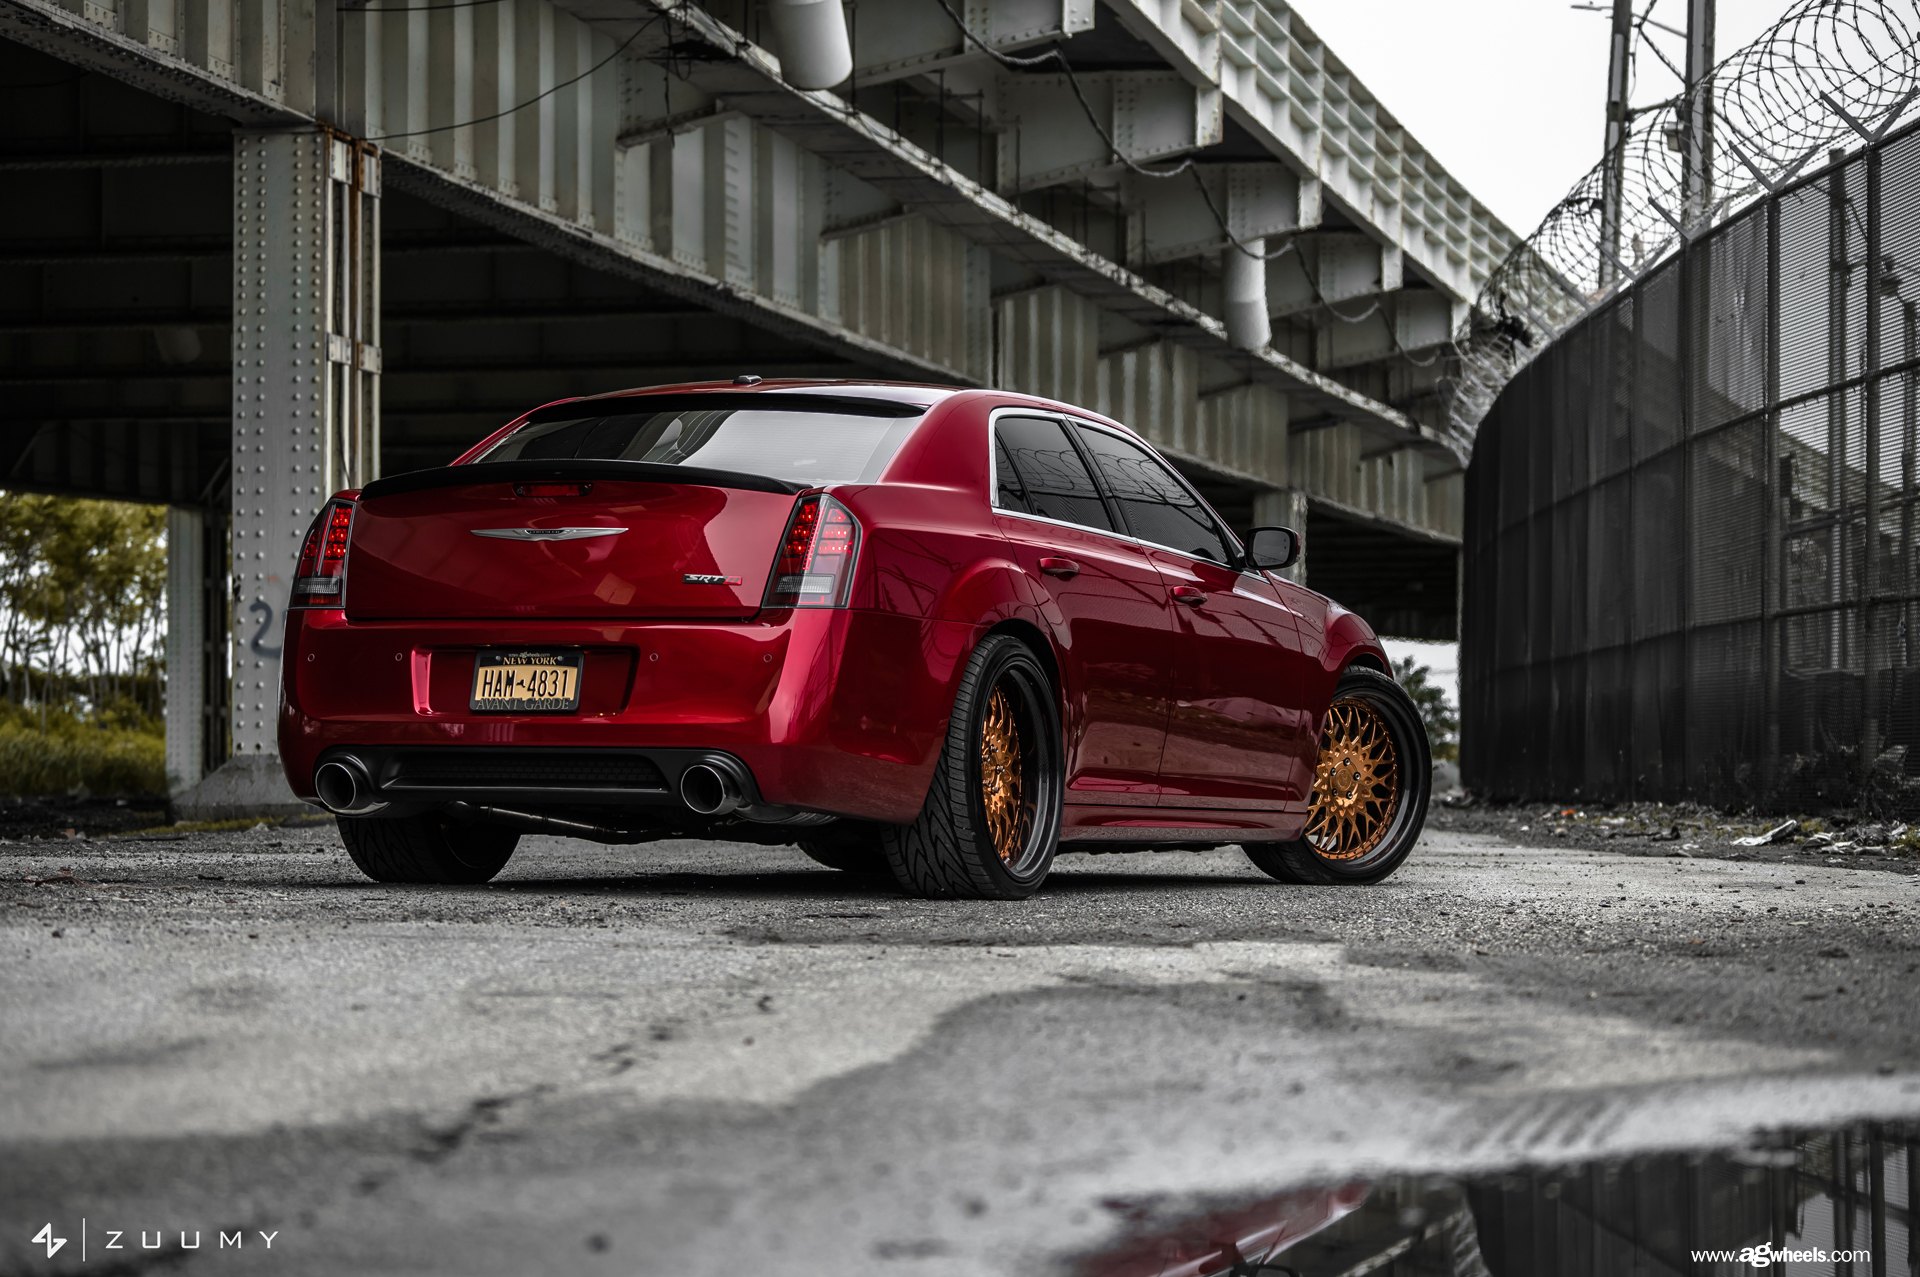 Factory Style Rear Spoiler on Red Chrysler 300 - Photo by Avant Garde Wheels